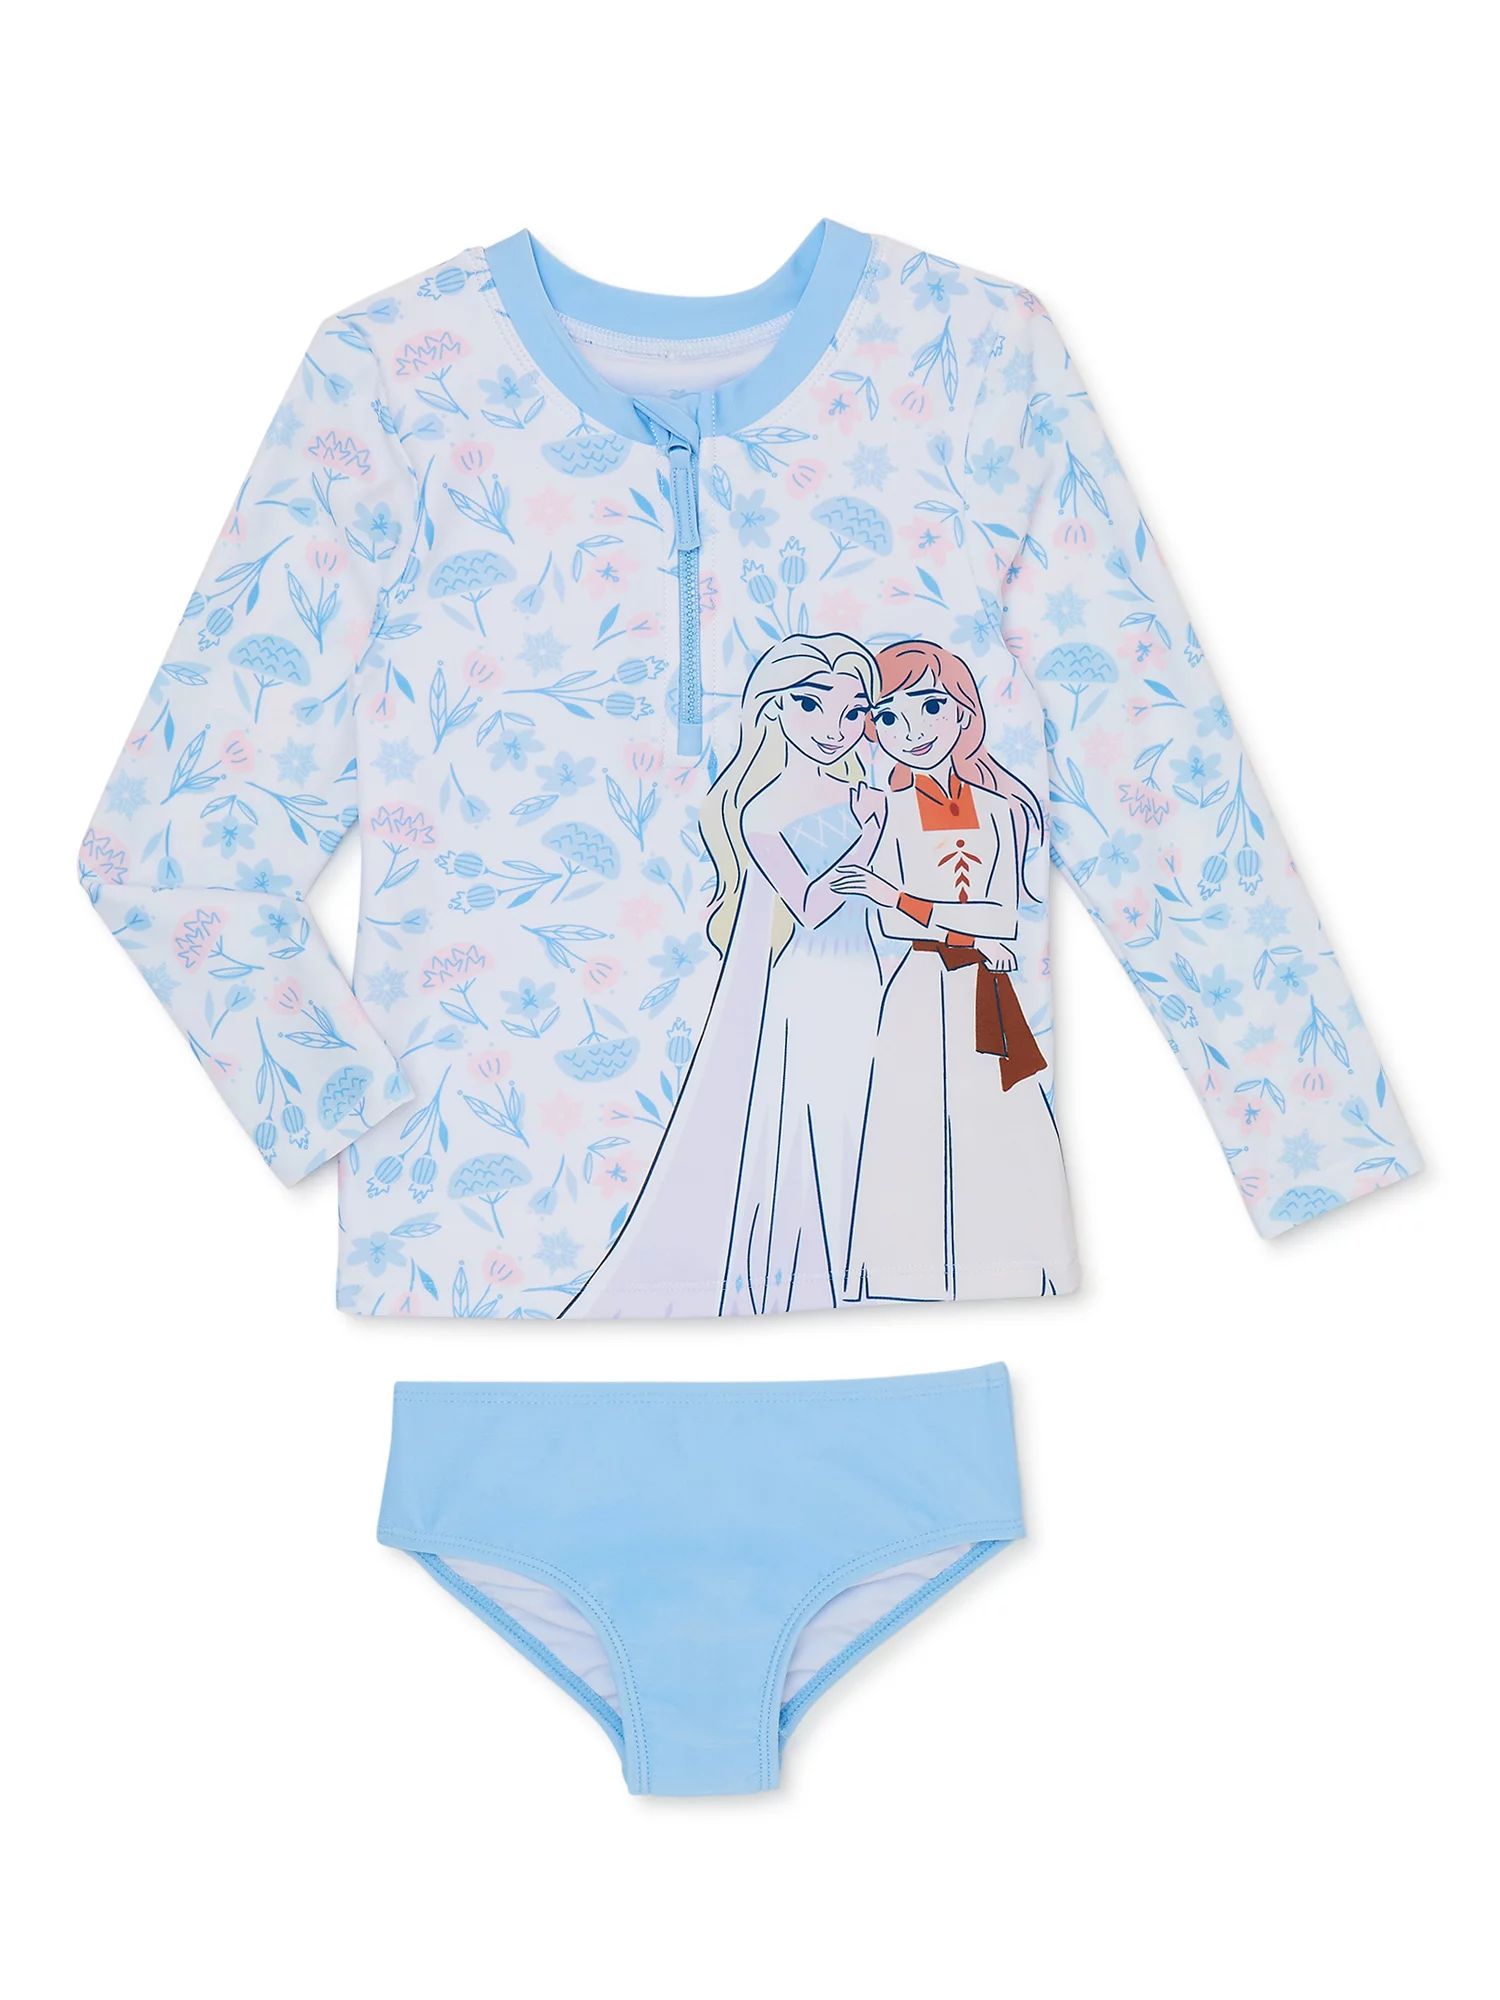 Frozen Toddler Girl Long Sleeve Rashguard and Swim Bottom Set, 2-Piece, Sizes 2T-5T | Walmart (US)